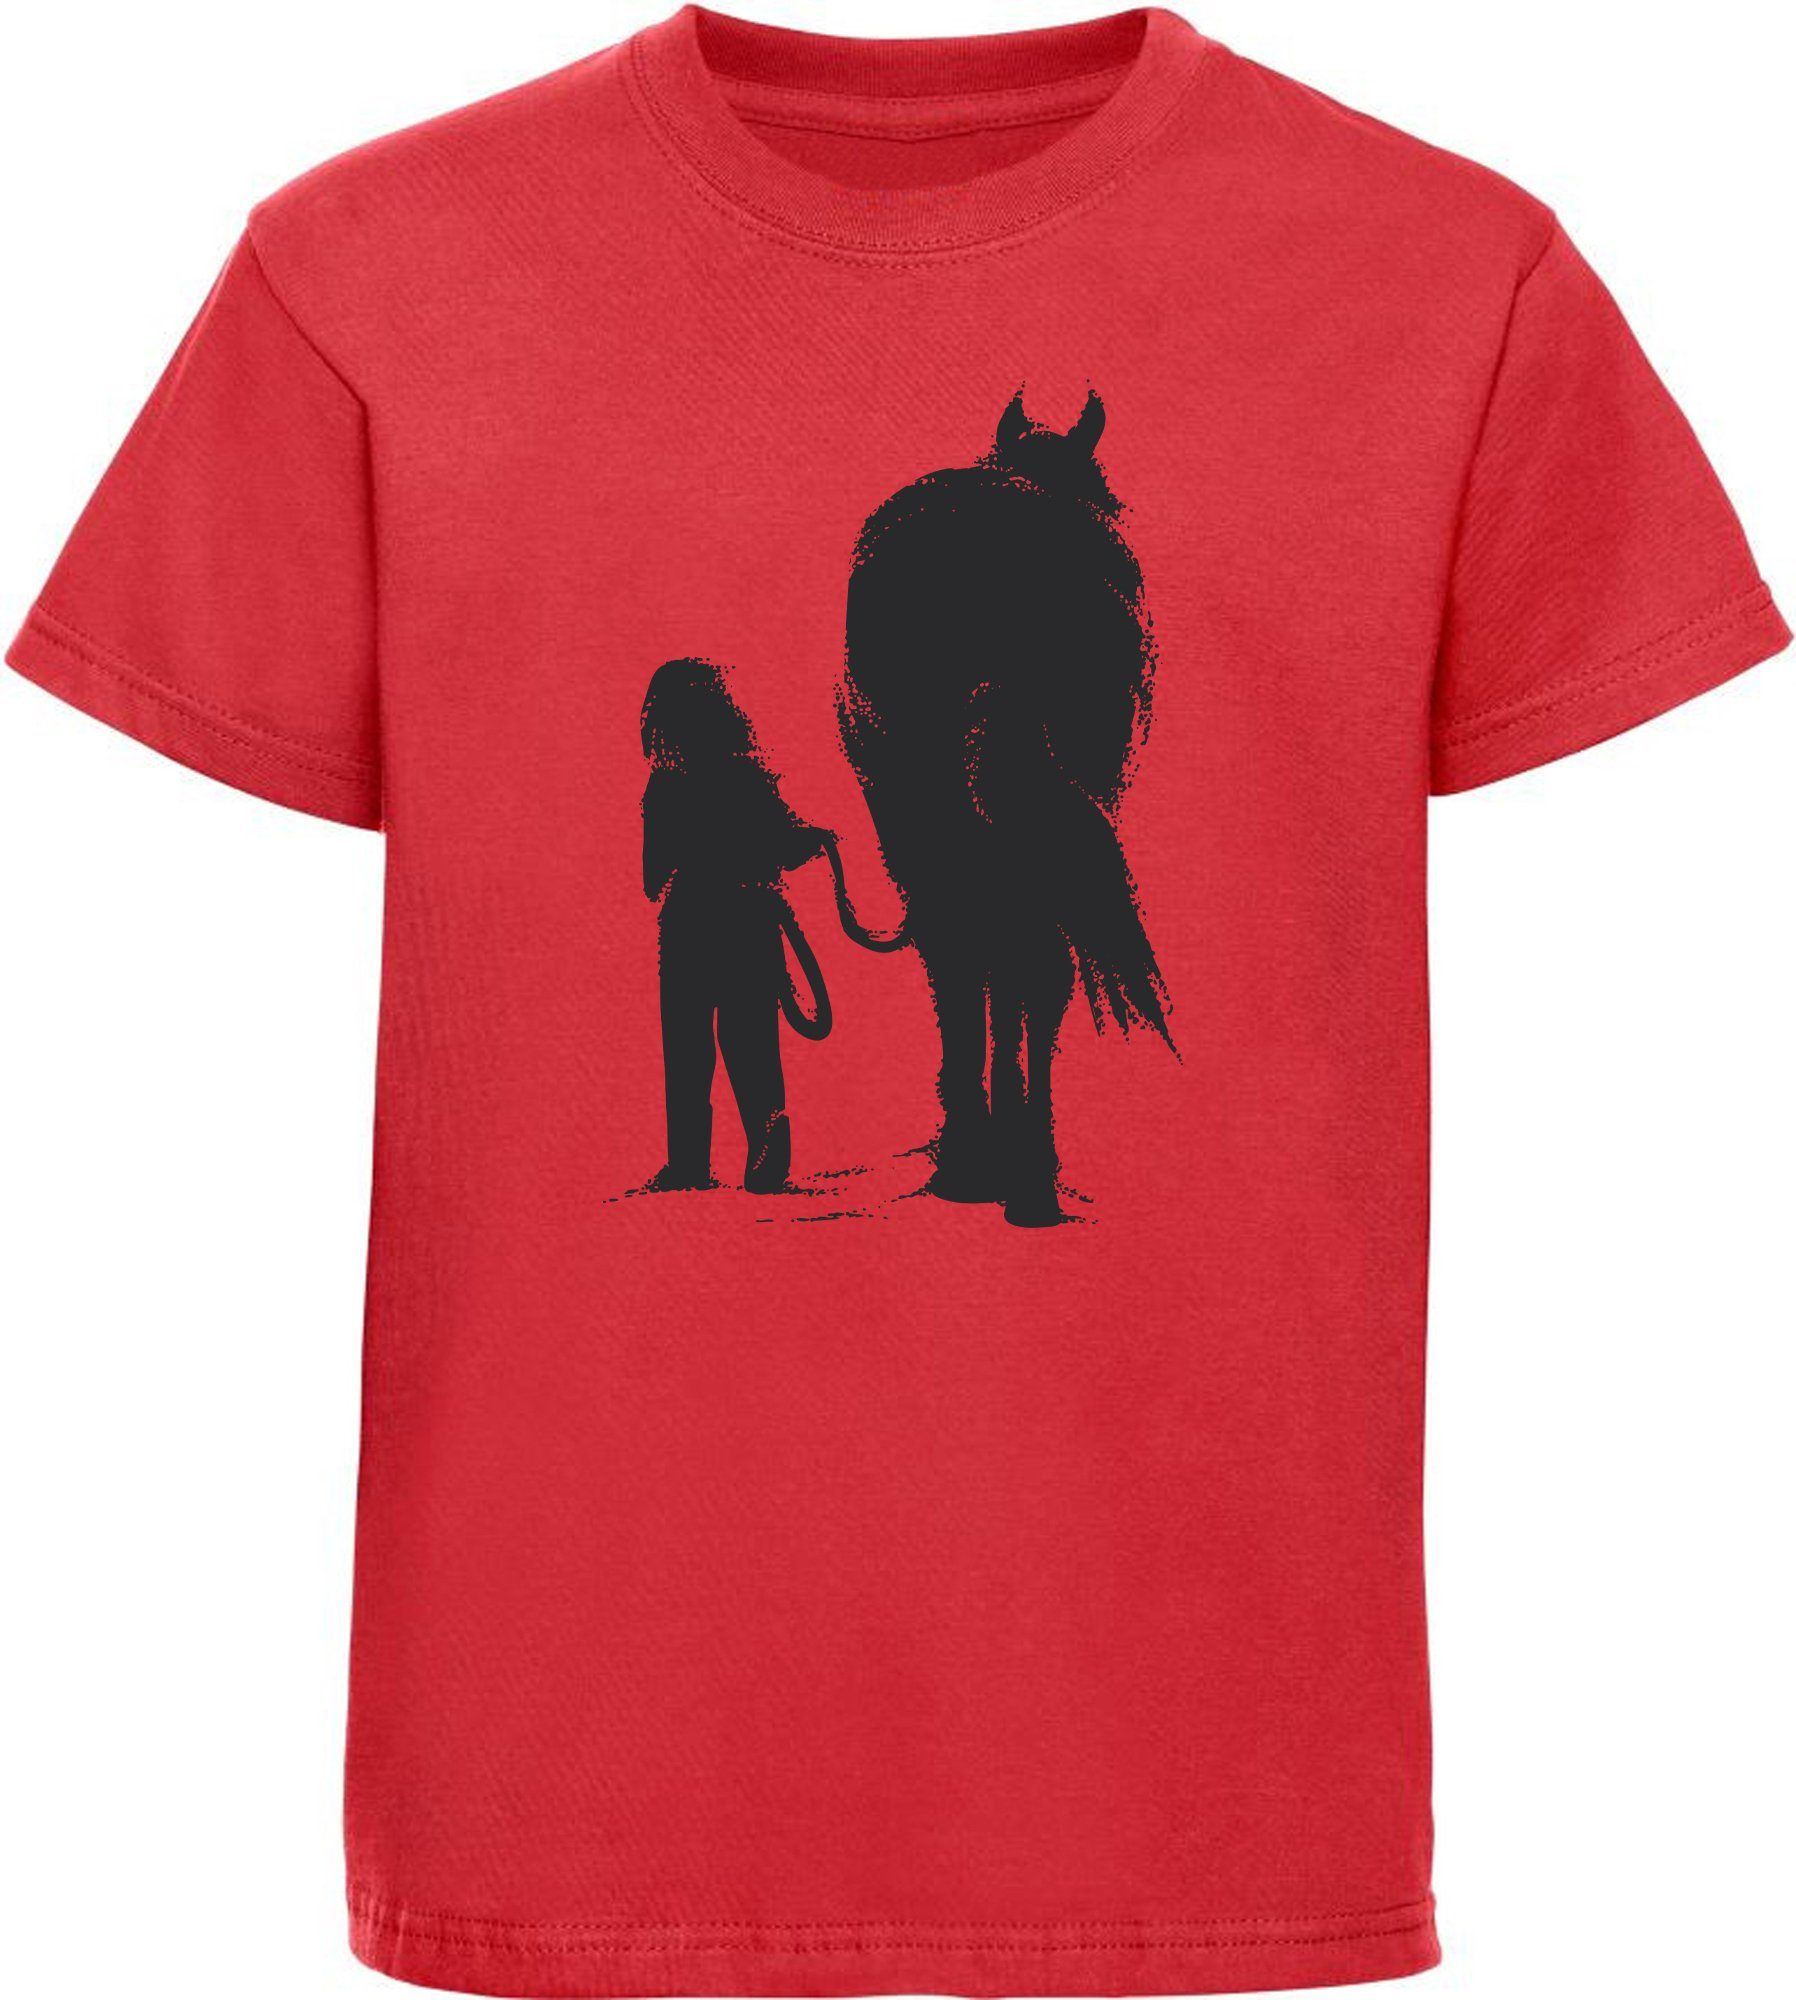 - & Spaziergang mit Kinder rot bedruckt Pferd Aufdruck, i250 Shirt beim Print T-Shirt MyDesign24 Baumwollshirt Mädchen